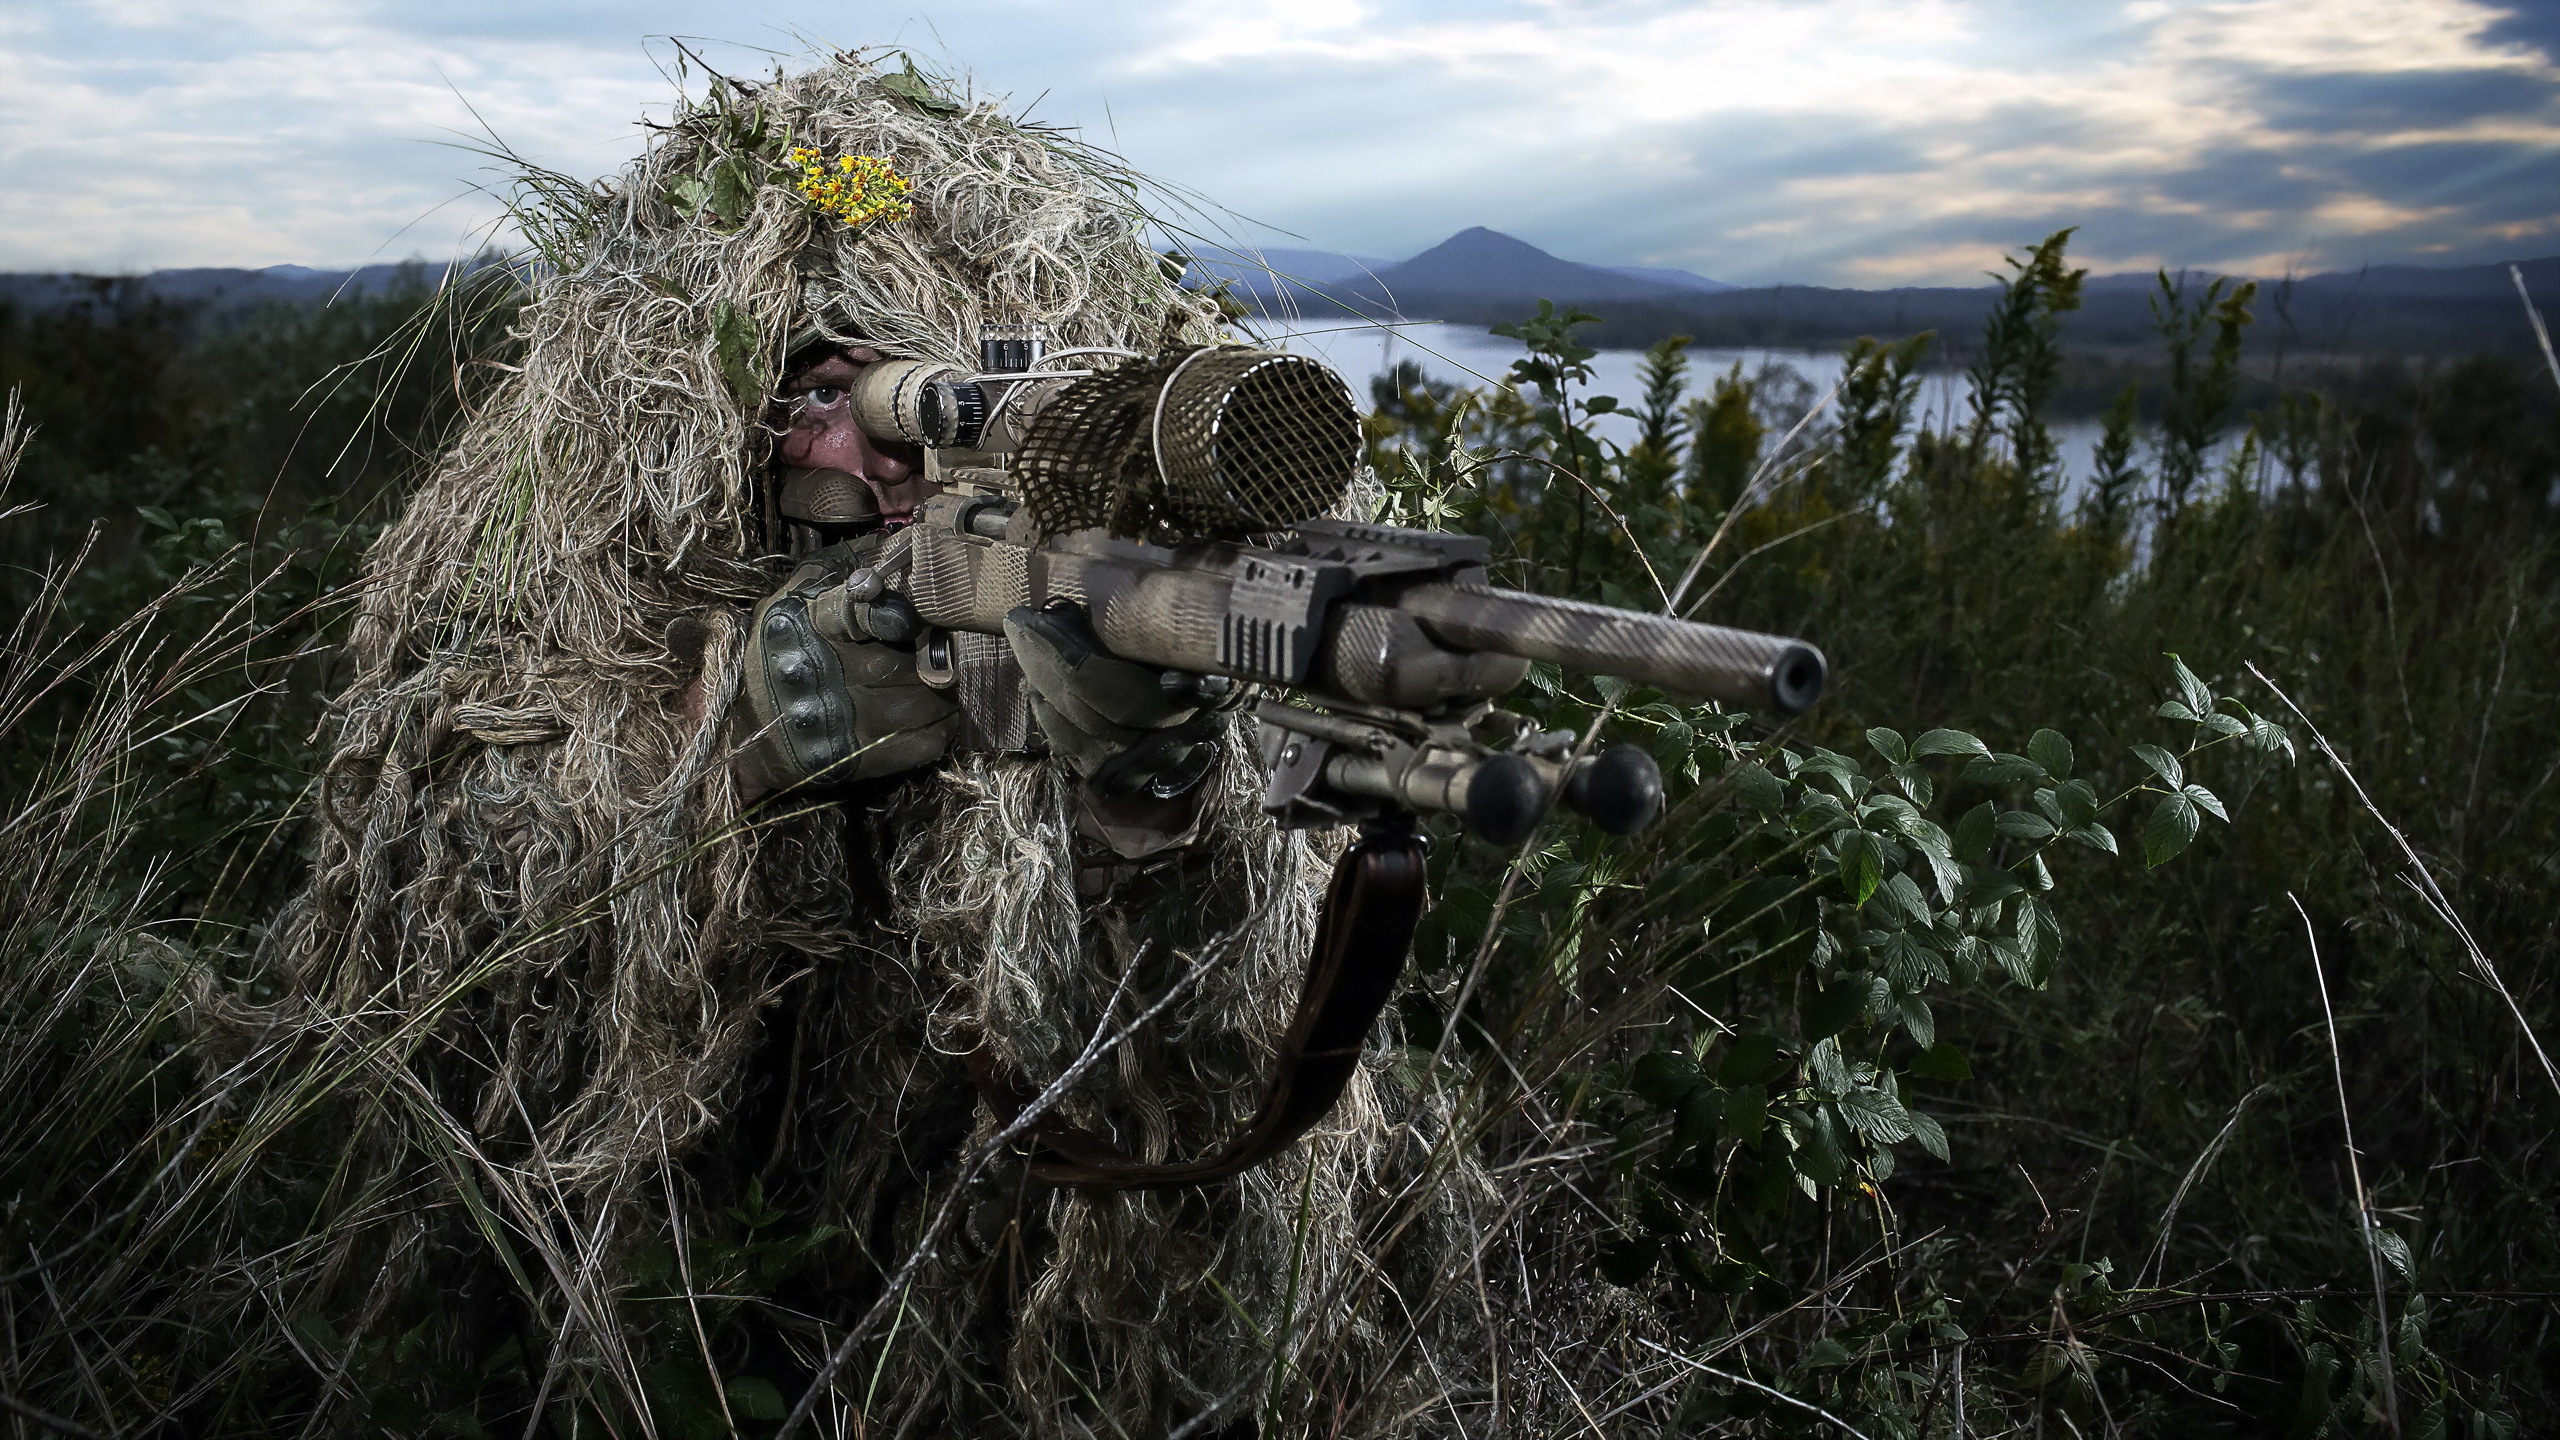 Sniper Rifle Soldier Weapon Gun Military D Wallpaper